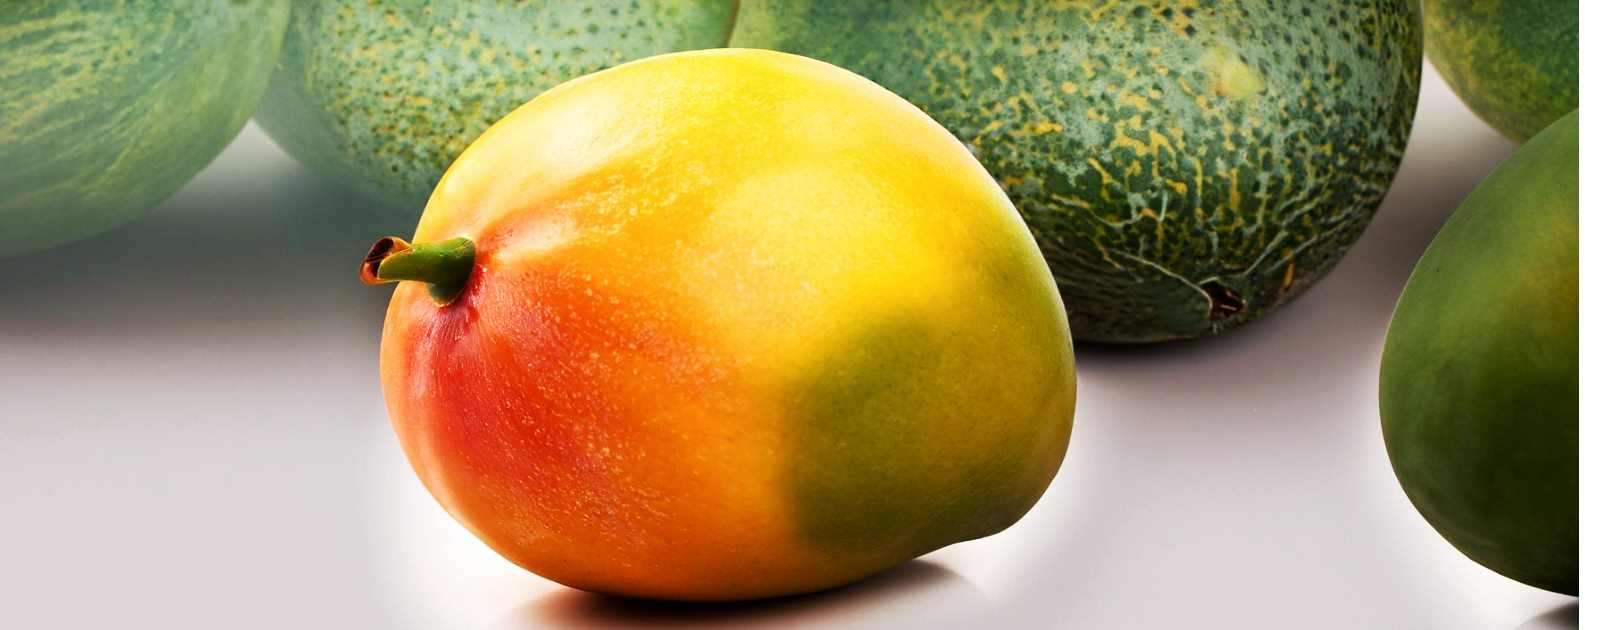 Is Mango a Melon or a Fruit?